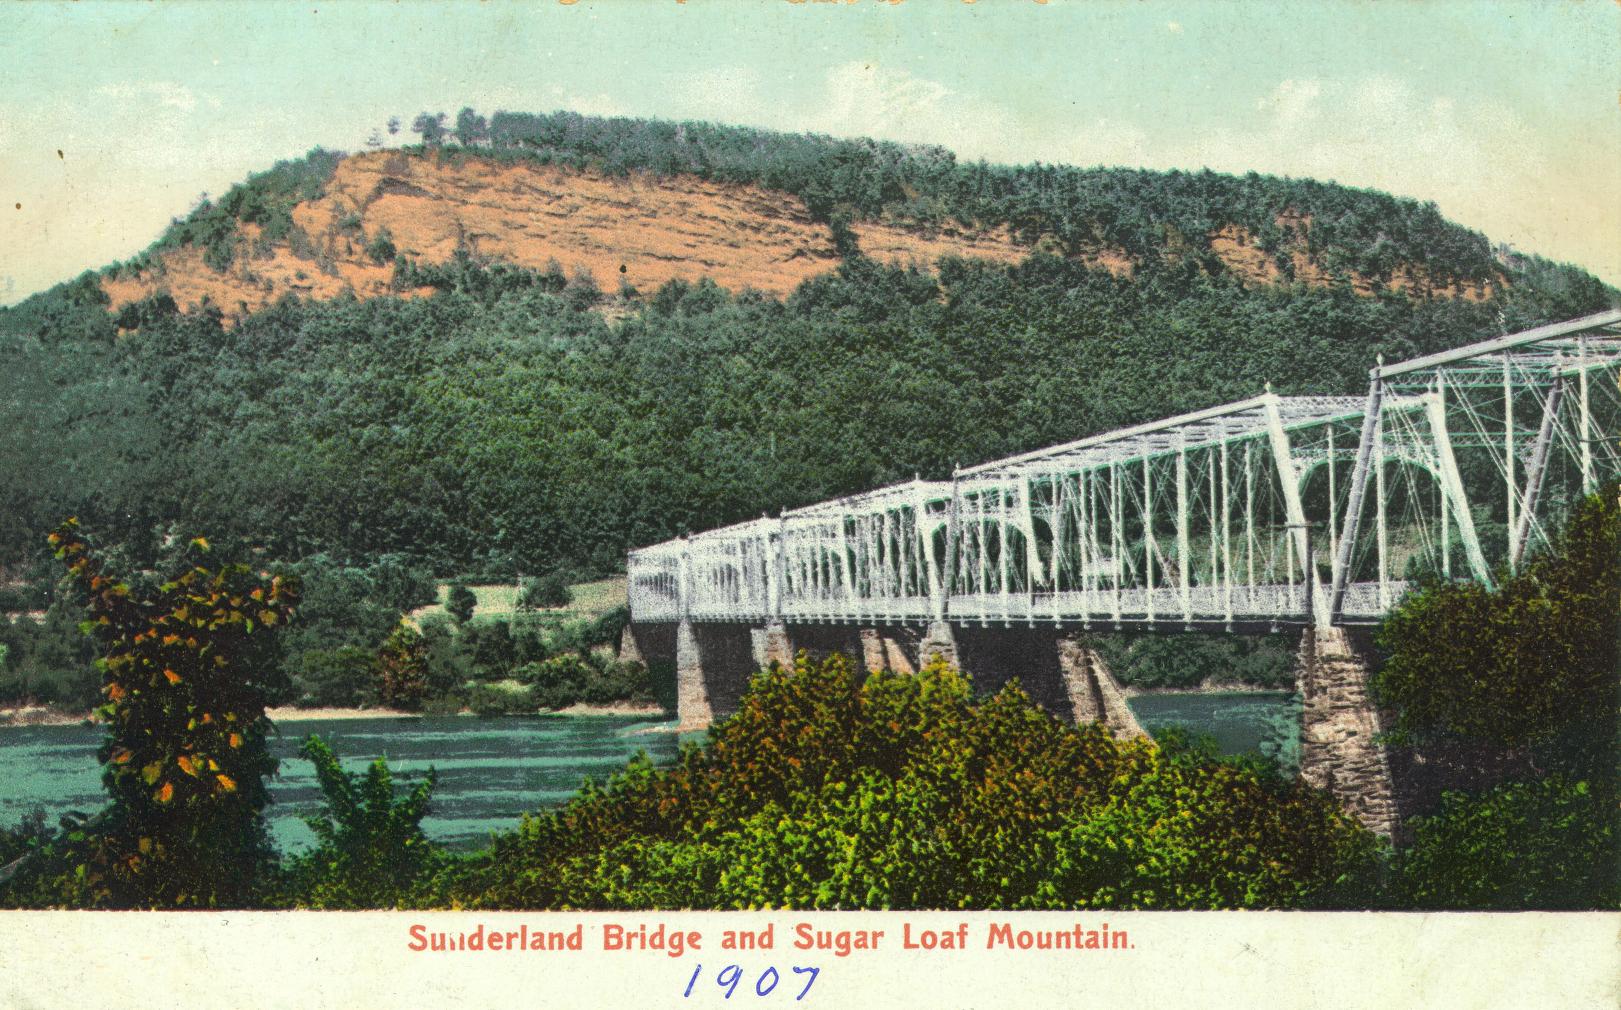 Sunderland Bridge and Sugar Loaf Mountain